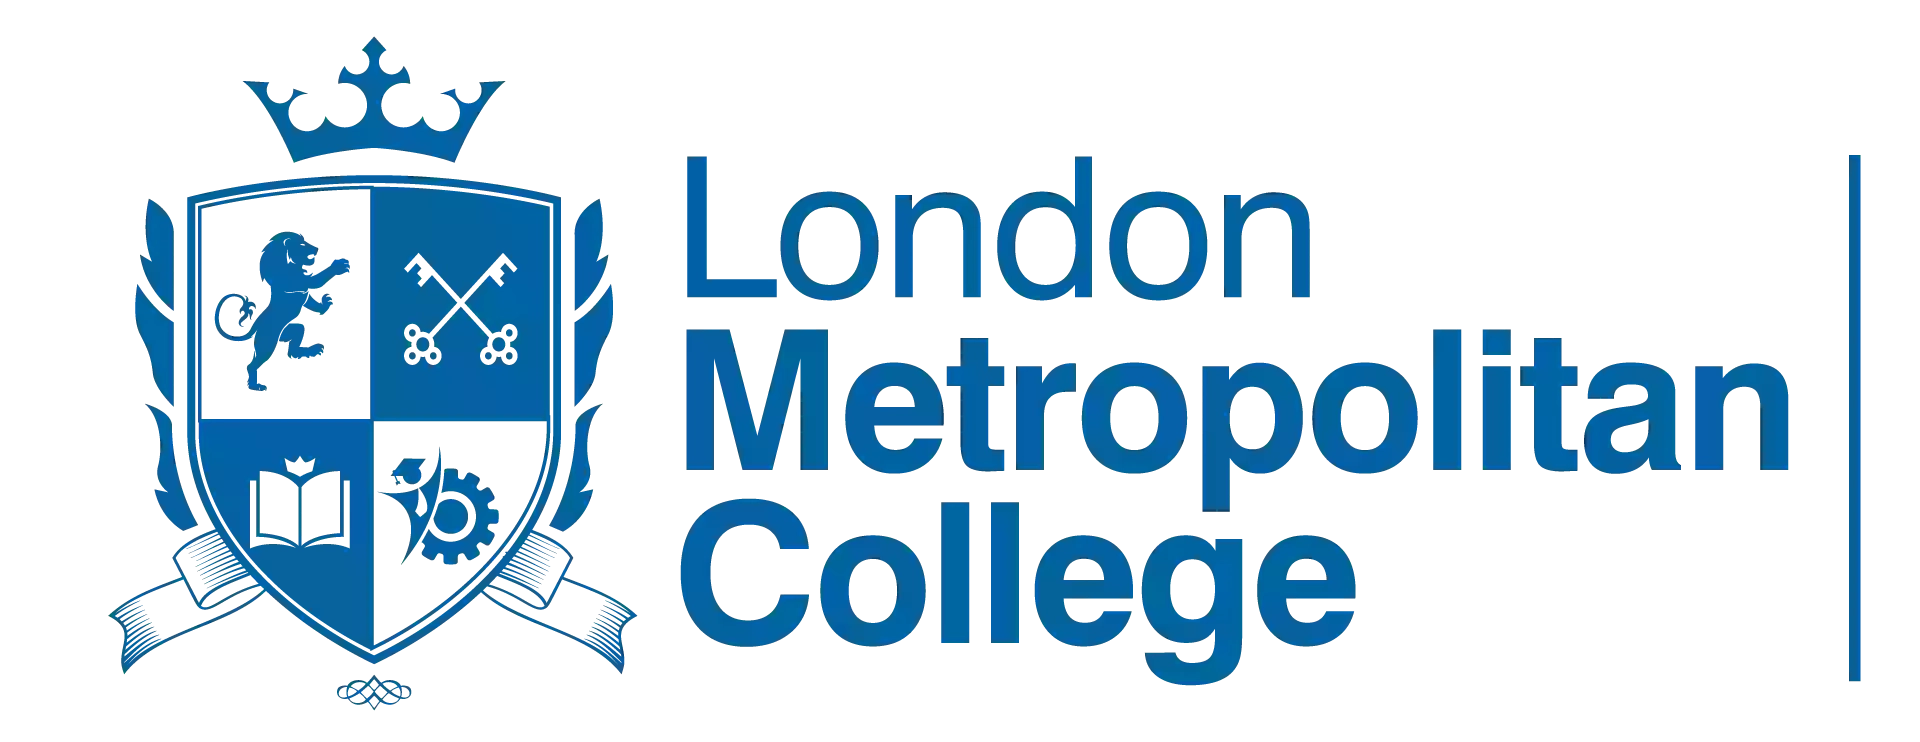 London Metropolitan College